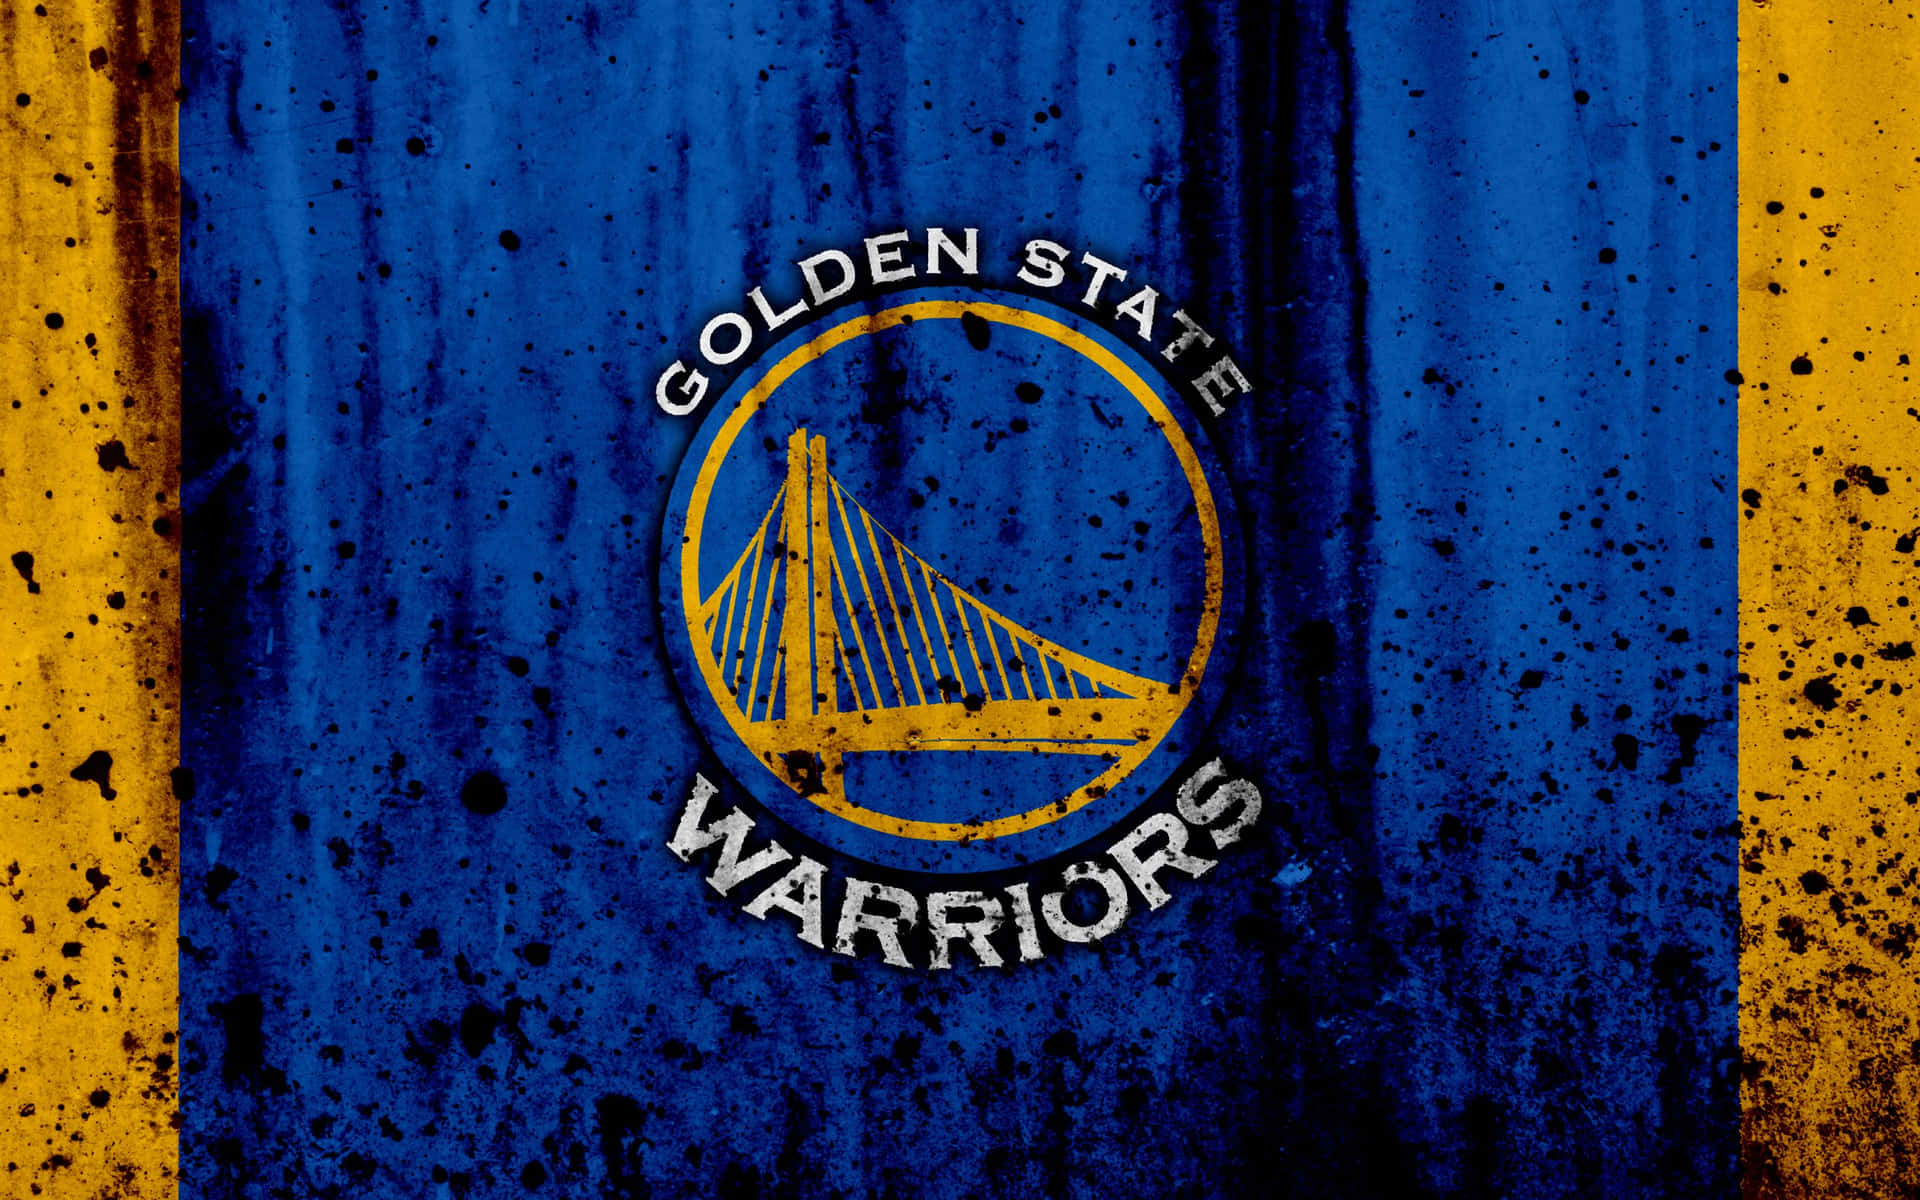 Logodo Golden State Warriors Com Respingos De Tinta Preta. Papel de Parede